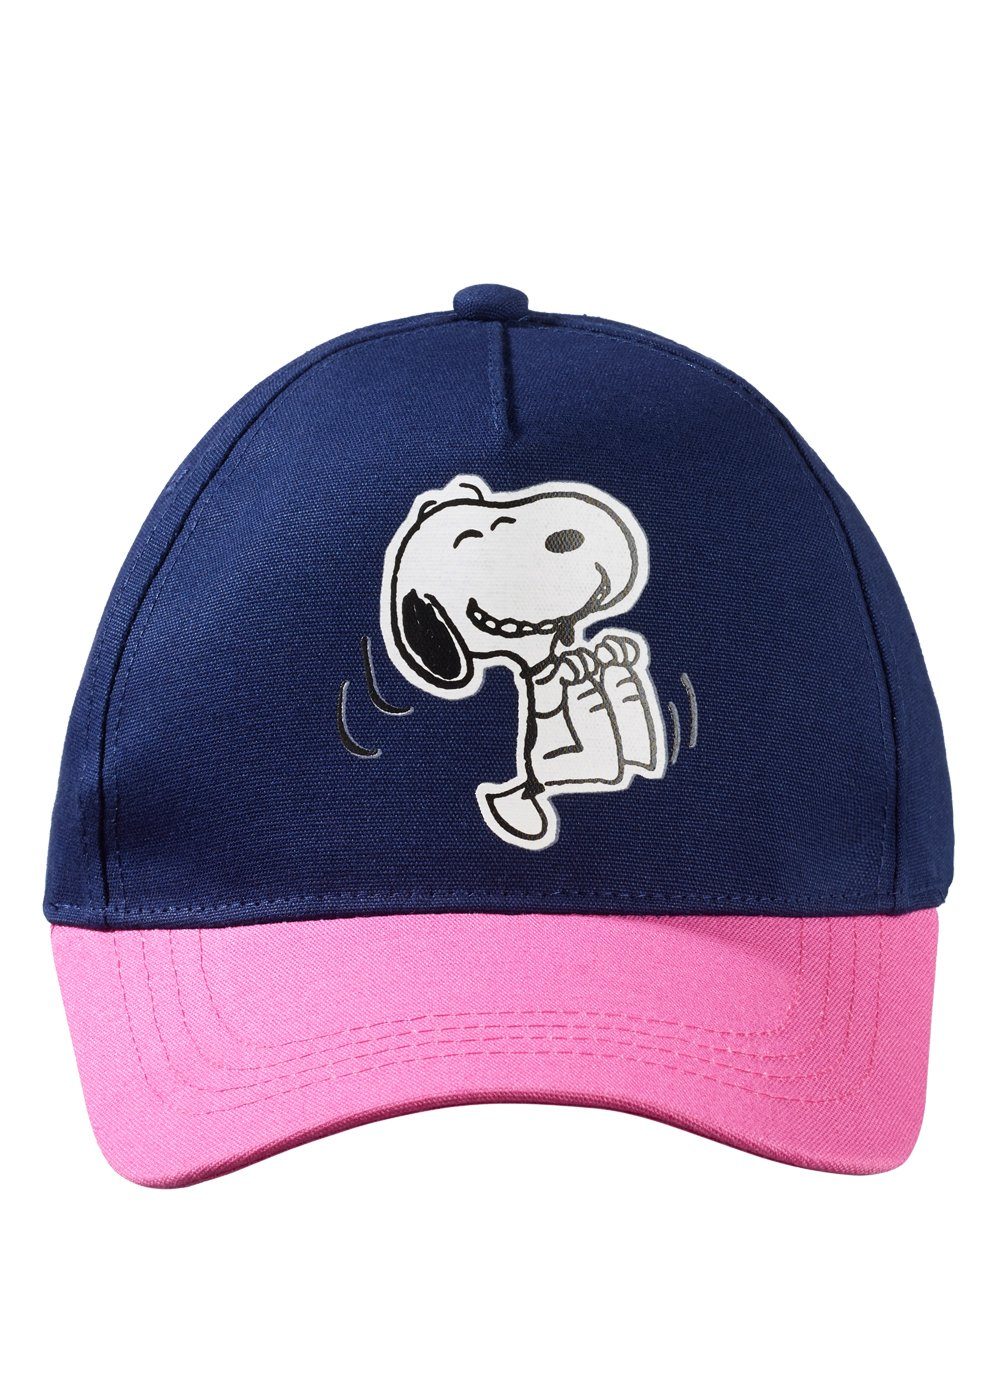 ONOMATO! Baseball Cap Peanuts - Snoopy Kappe für Mädchen